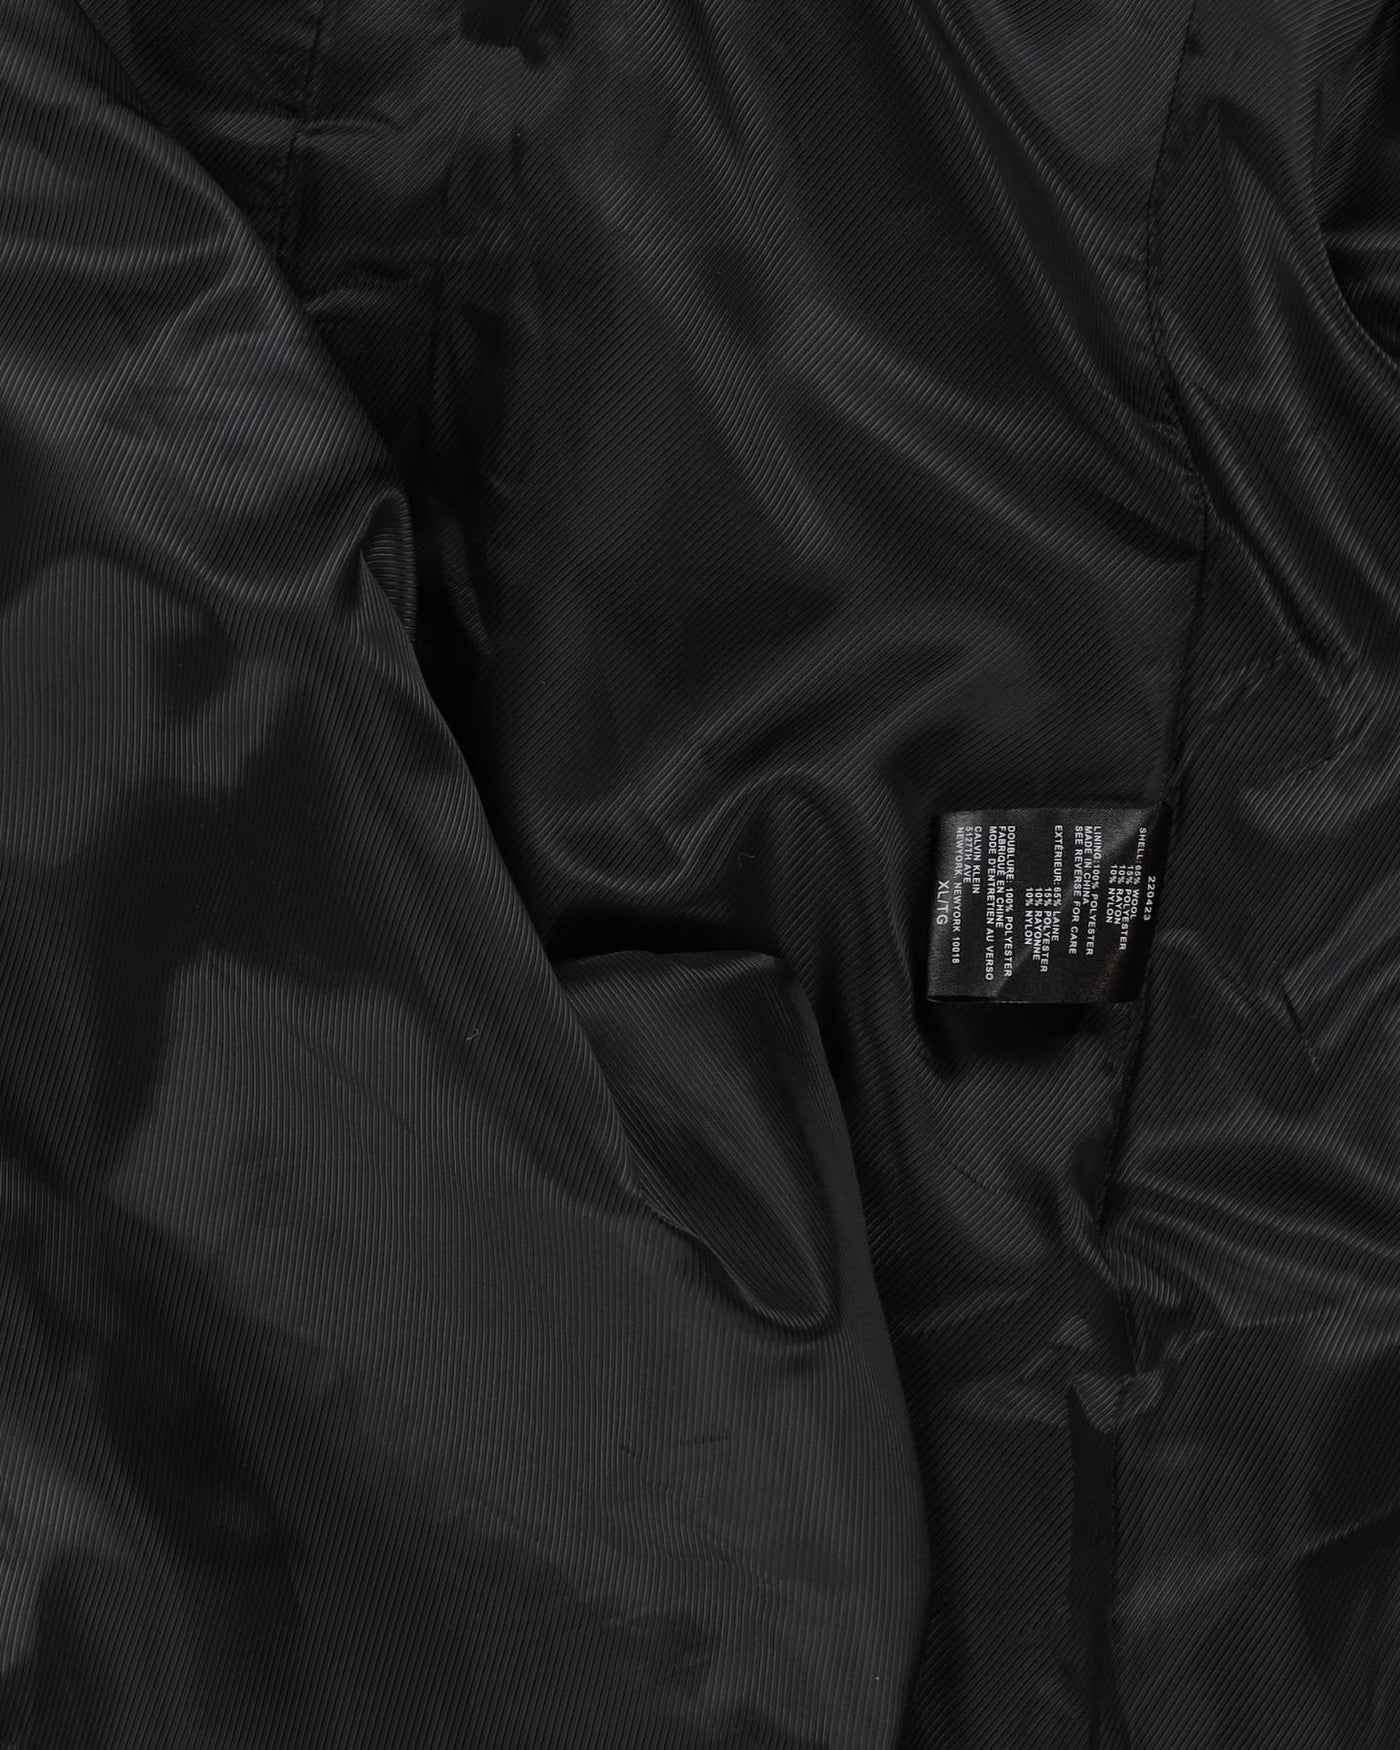 Calvin Klein Black Belted Short Overcoat - L